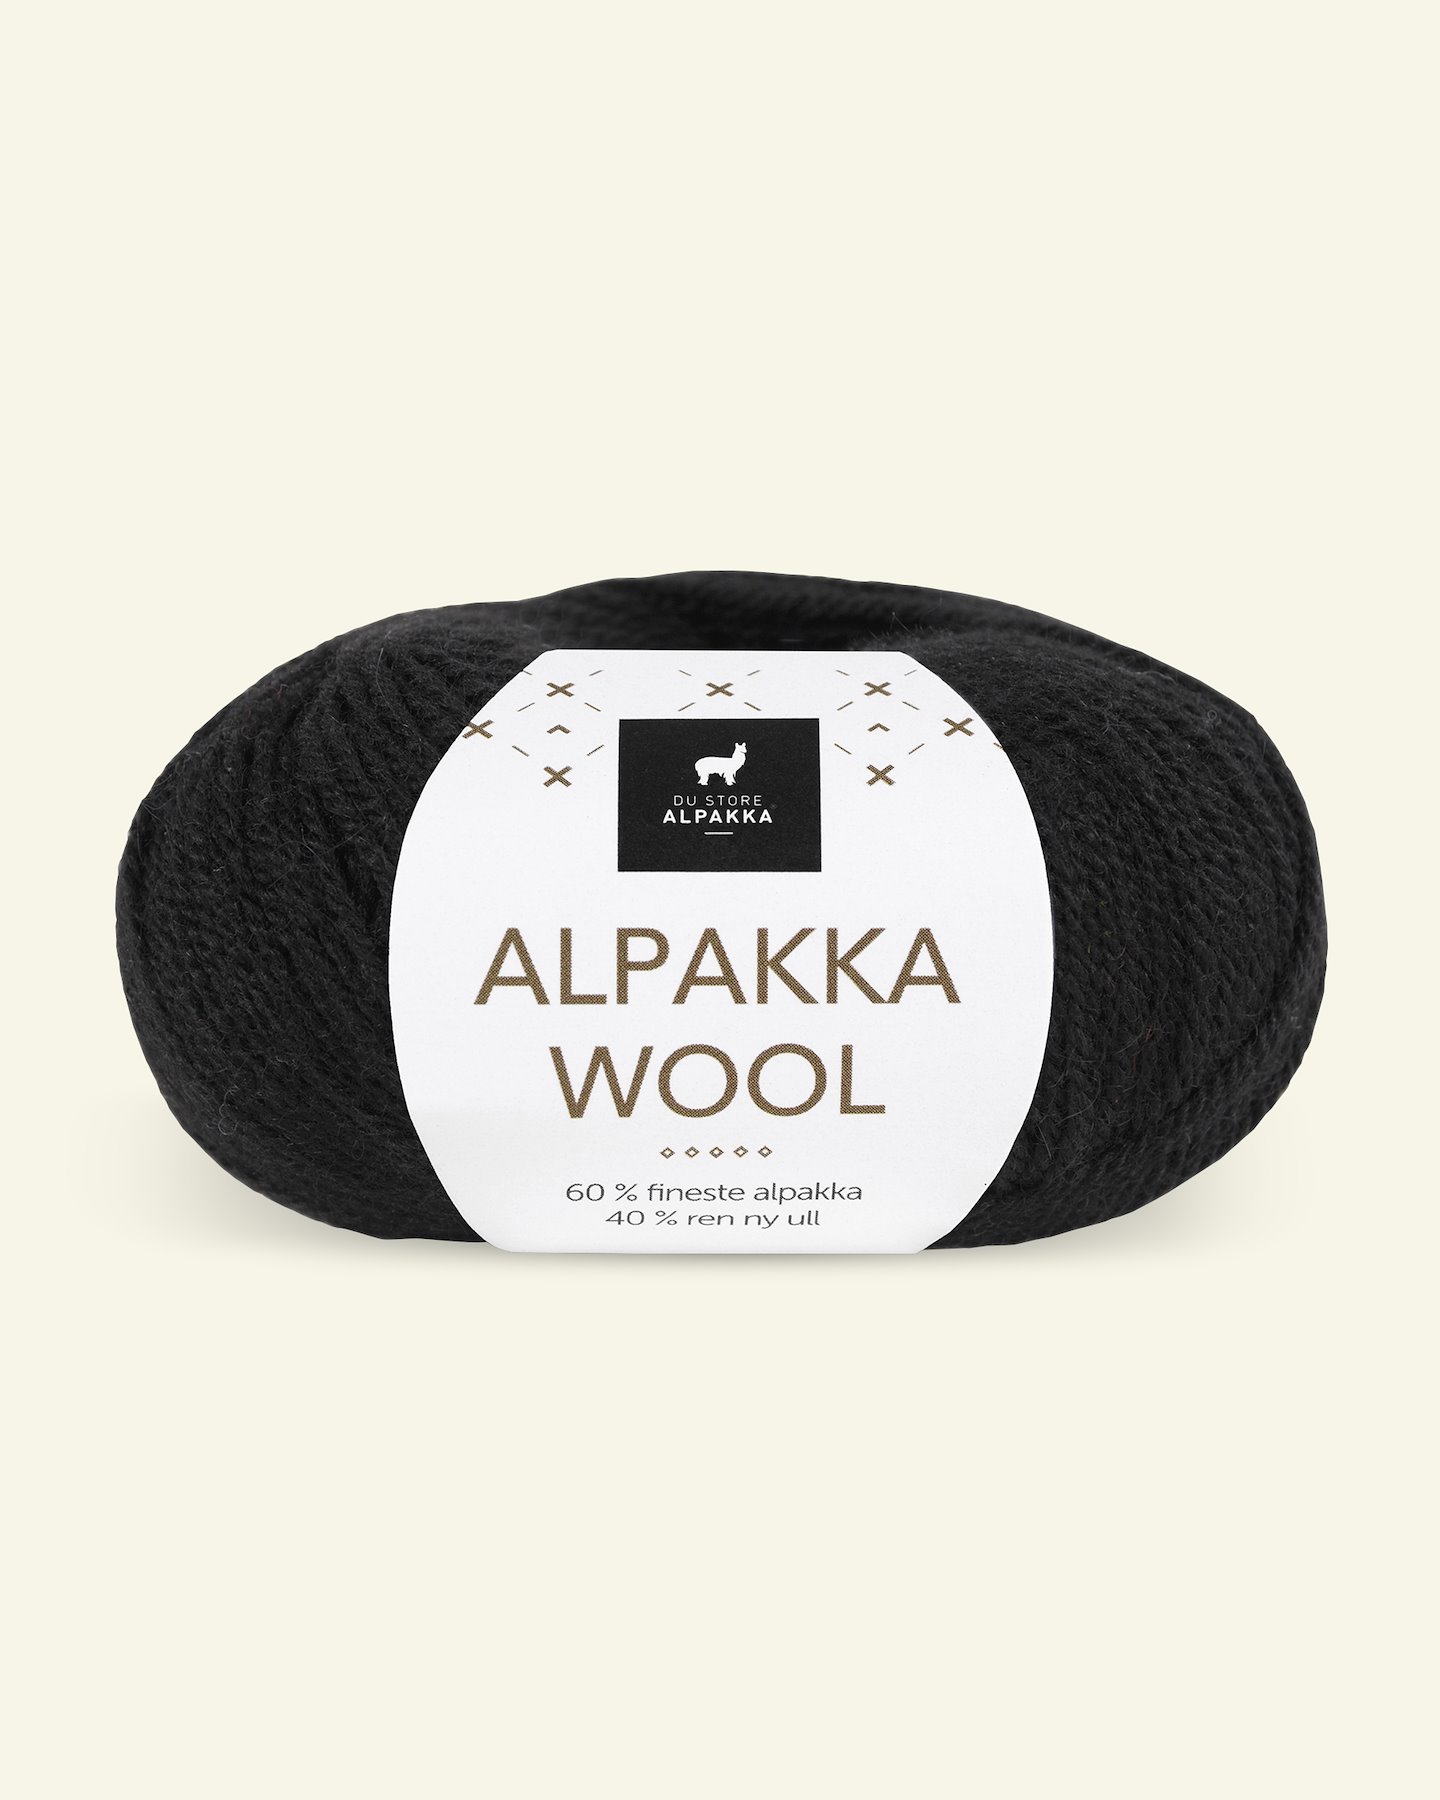 Du Store Alpakka, alpaka ullgarn "Alpakka Wool", sort (526) 90000560_pack